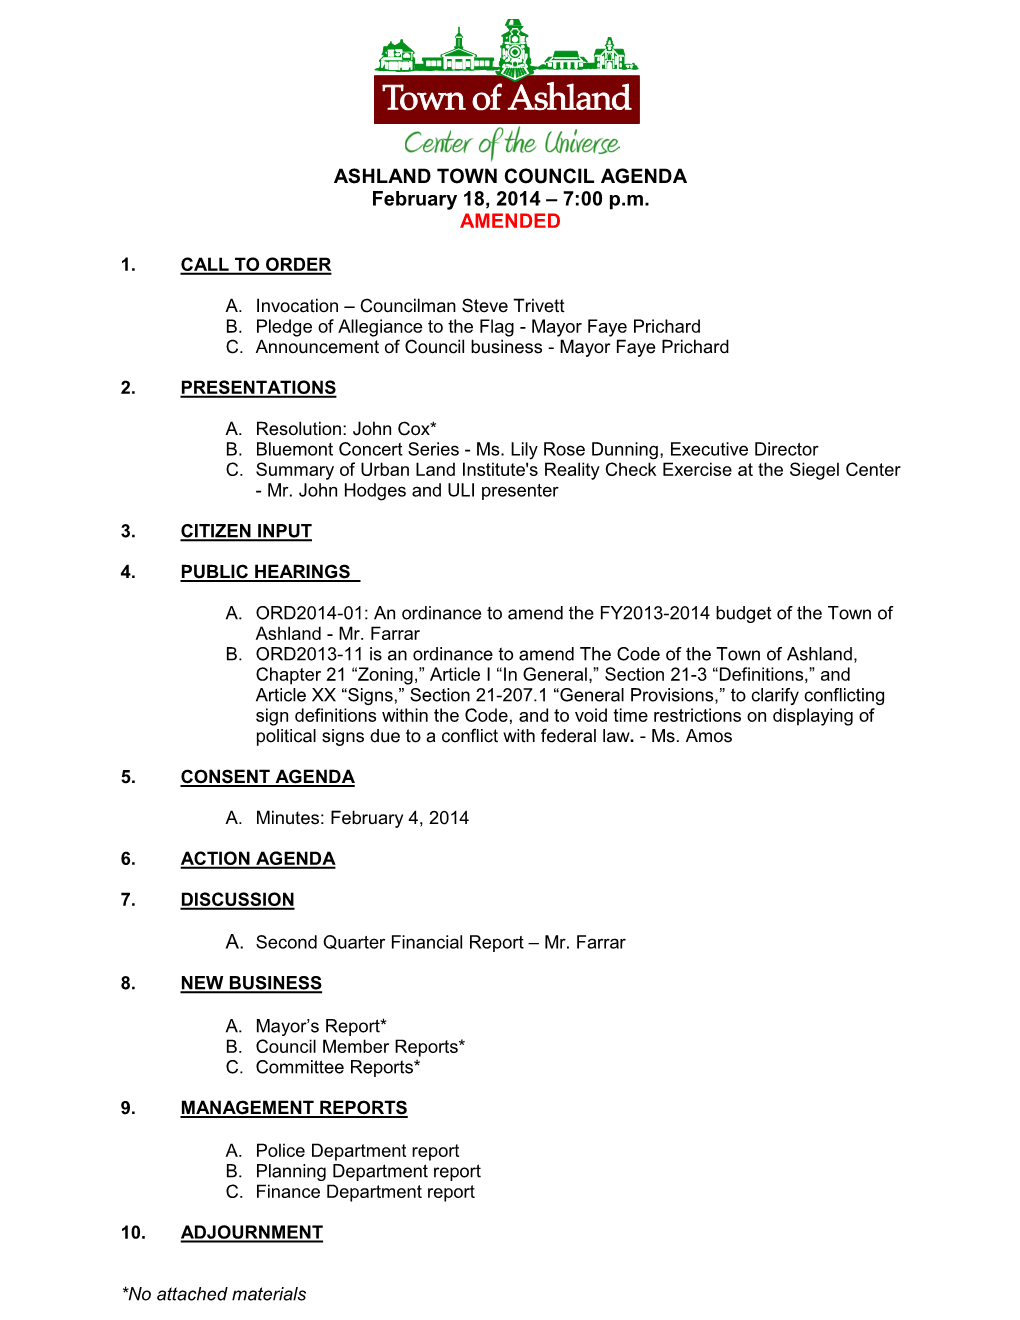 ASHLAND TOWN COUNCIL AGENDA February 18, 2014 – 7:00 P.M